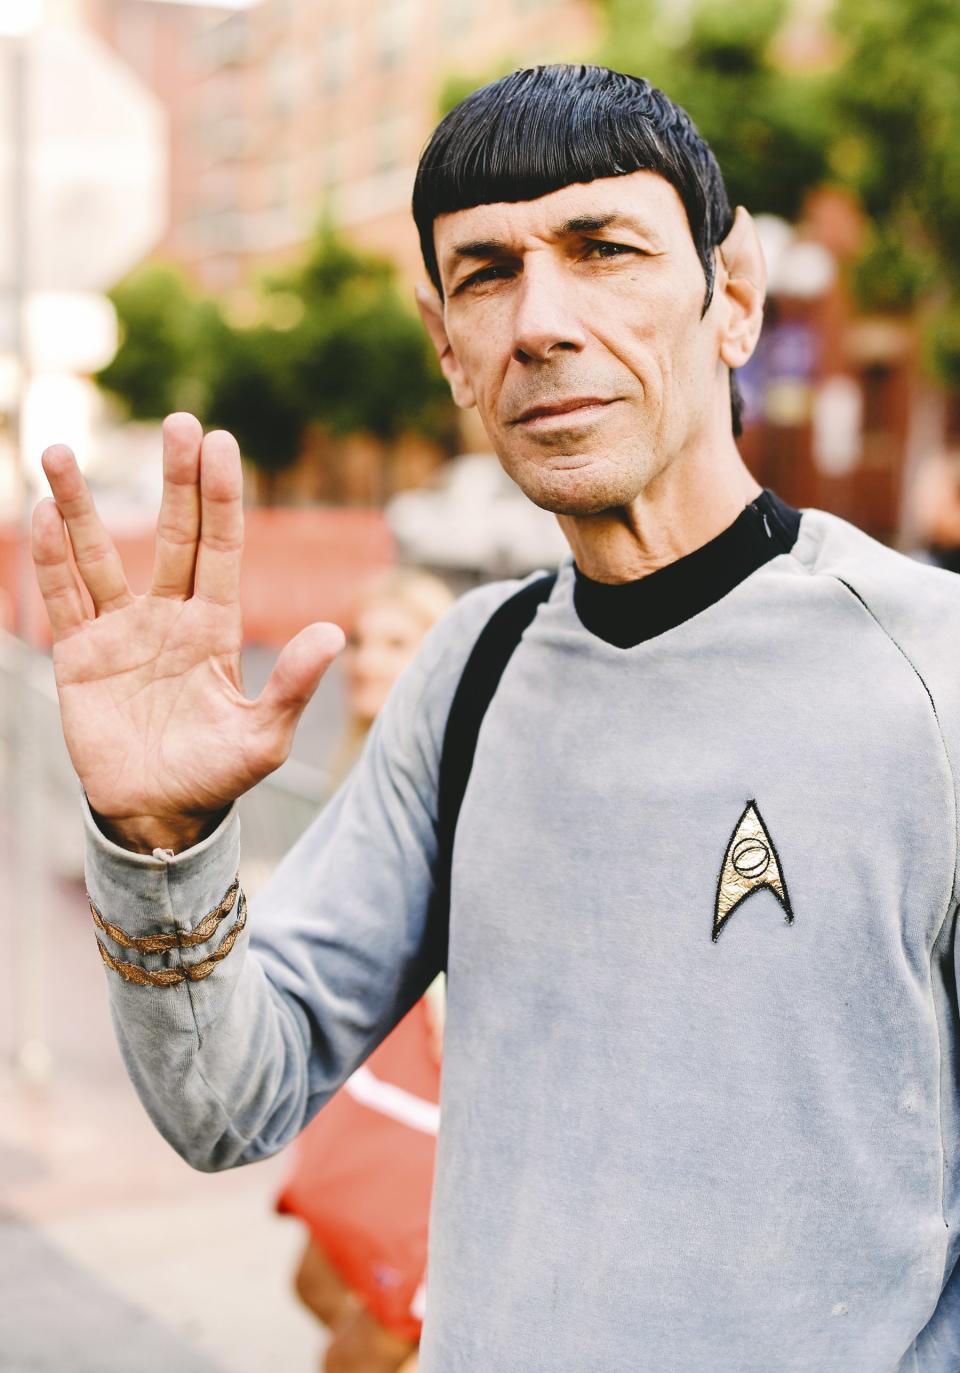 Spock from Star Trek cosplayer